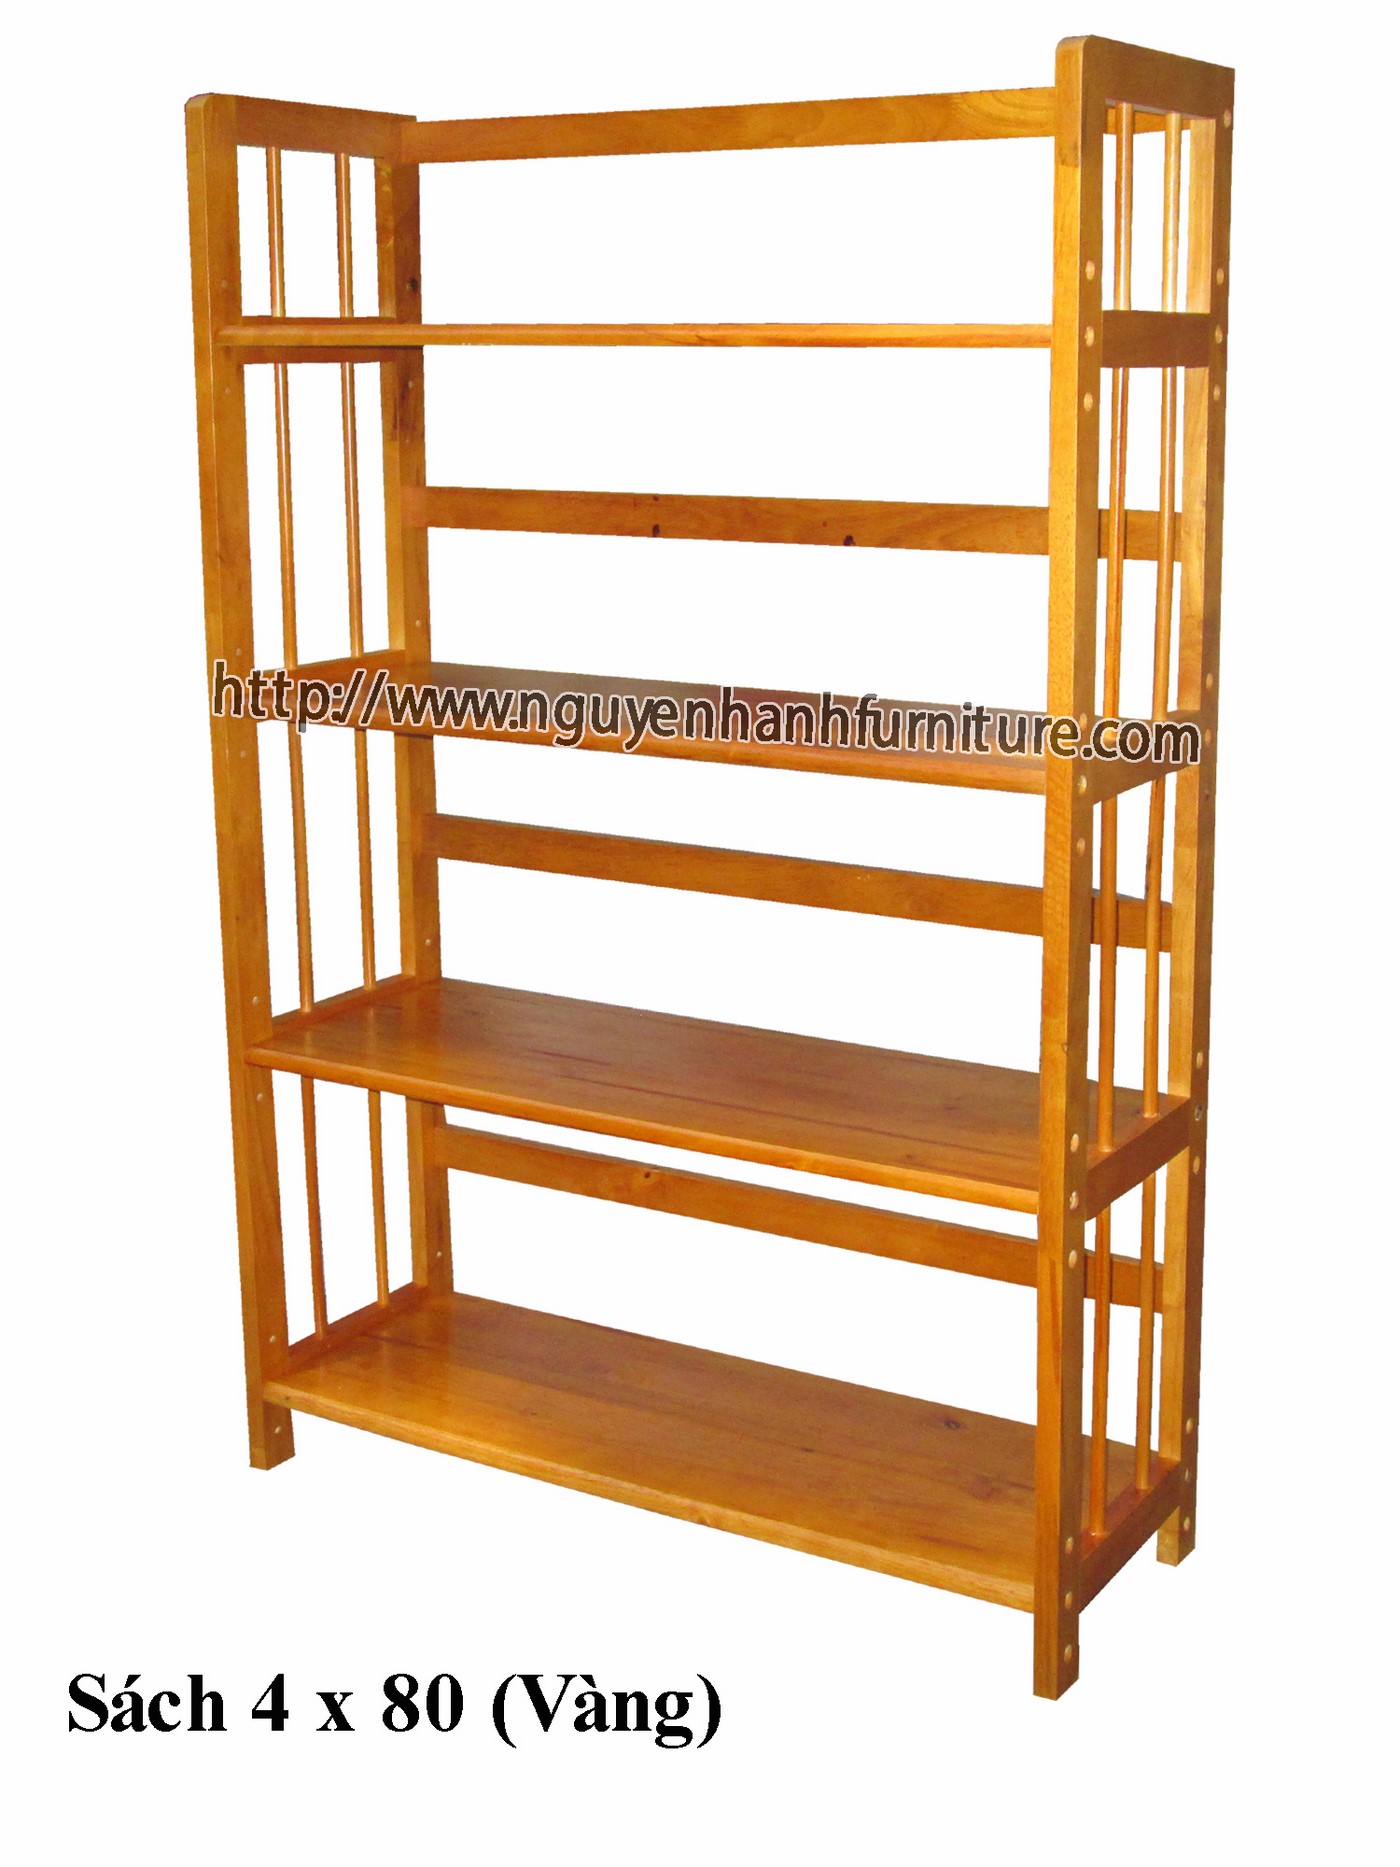 Name product: 4 storey Adjustable Bookshelf 80 (Yellow) - Dimensions: 80 x 28 x 120 (H) - Description: Wood natural rubber